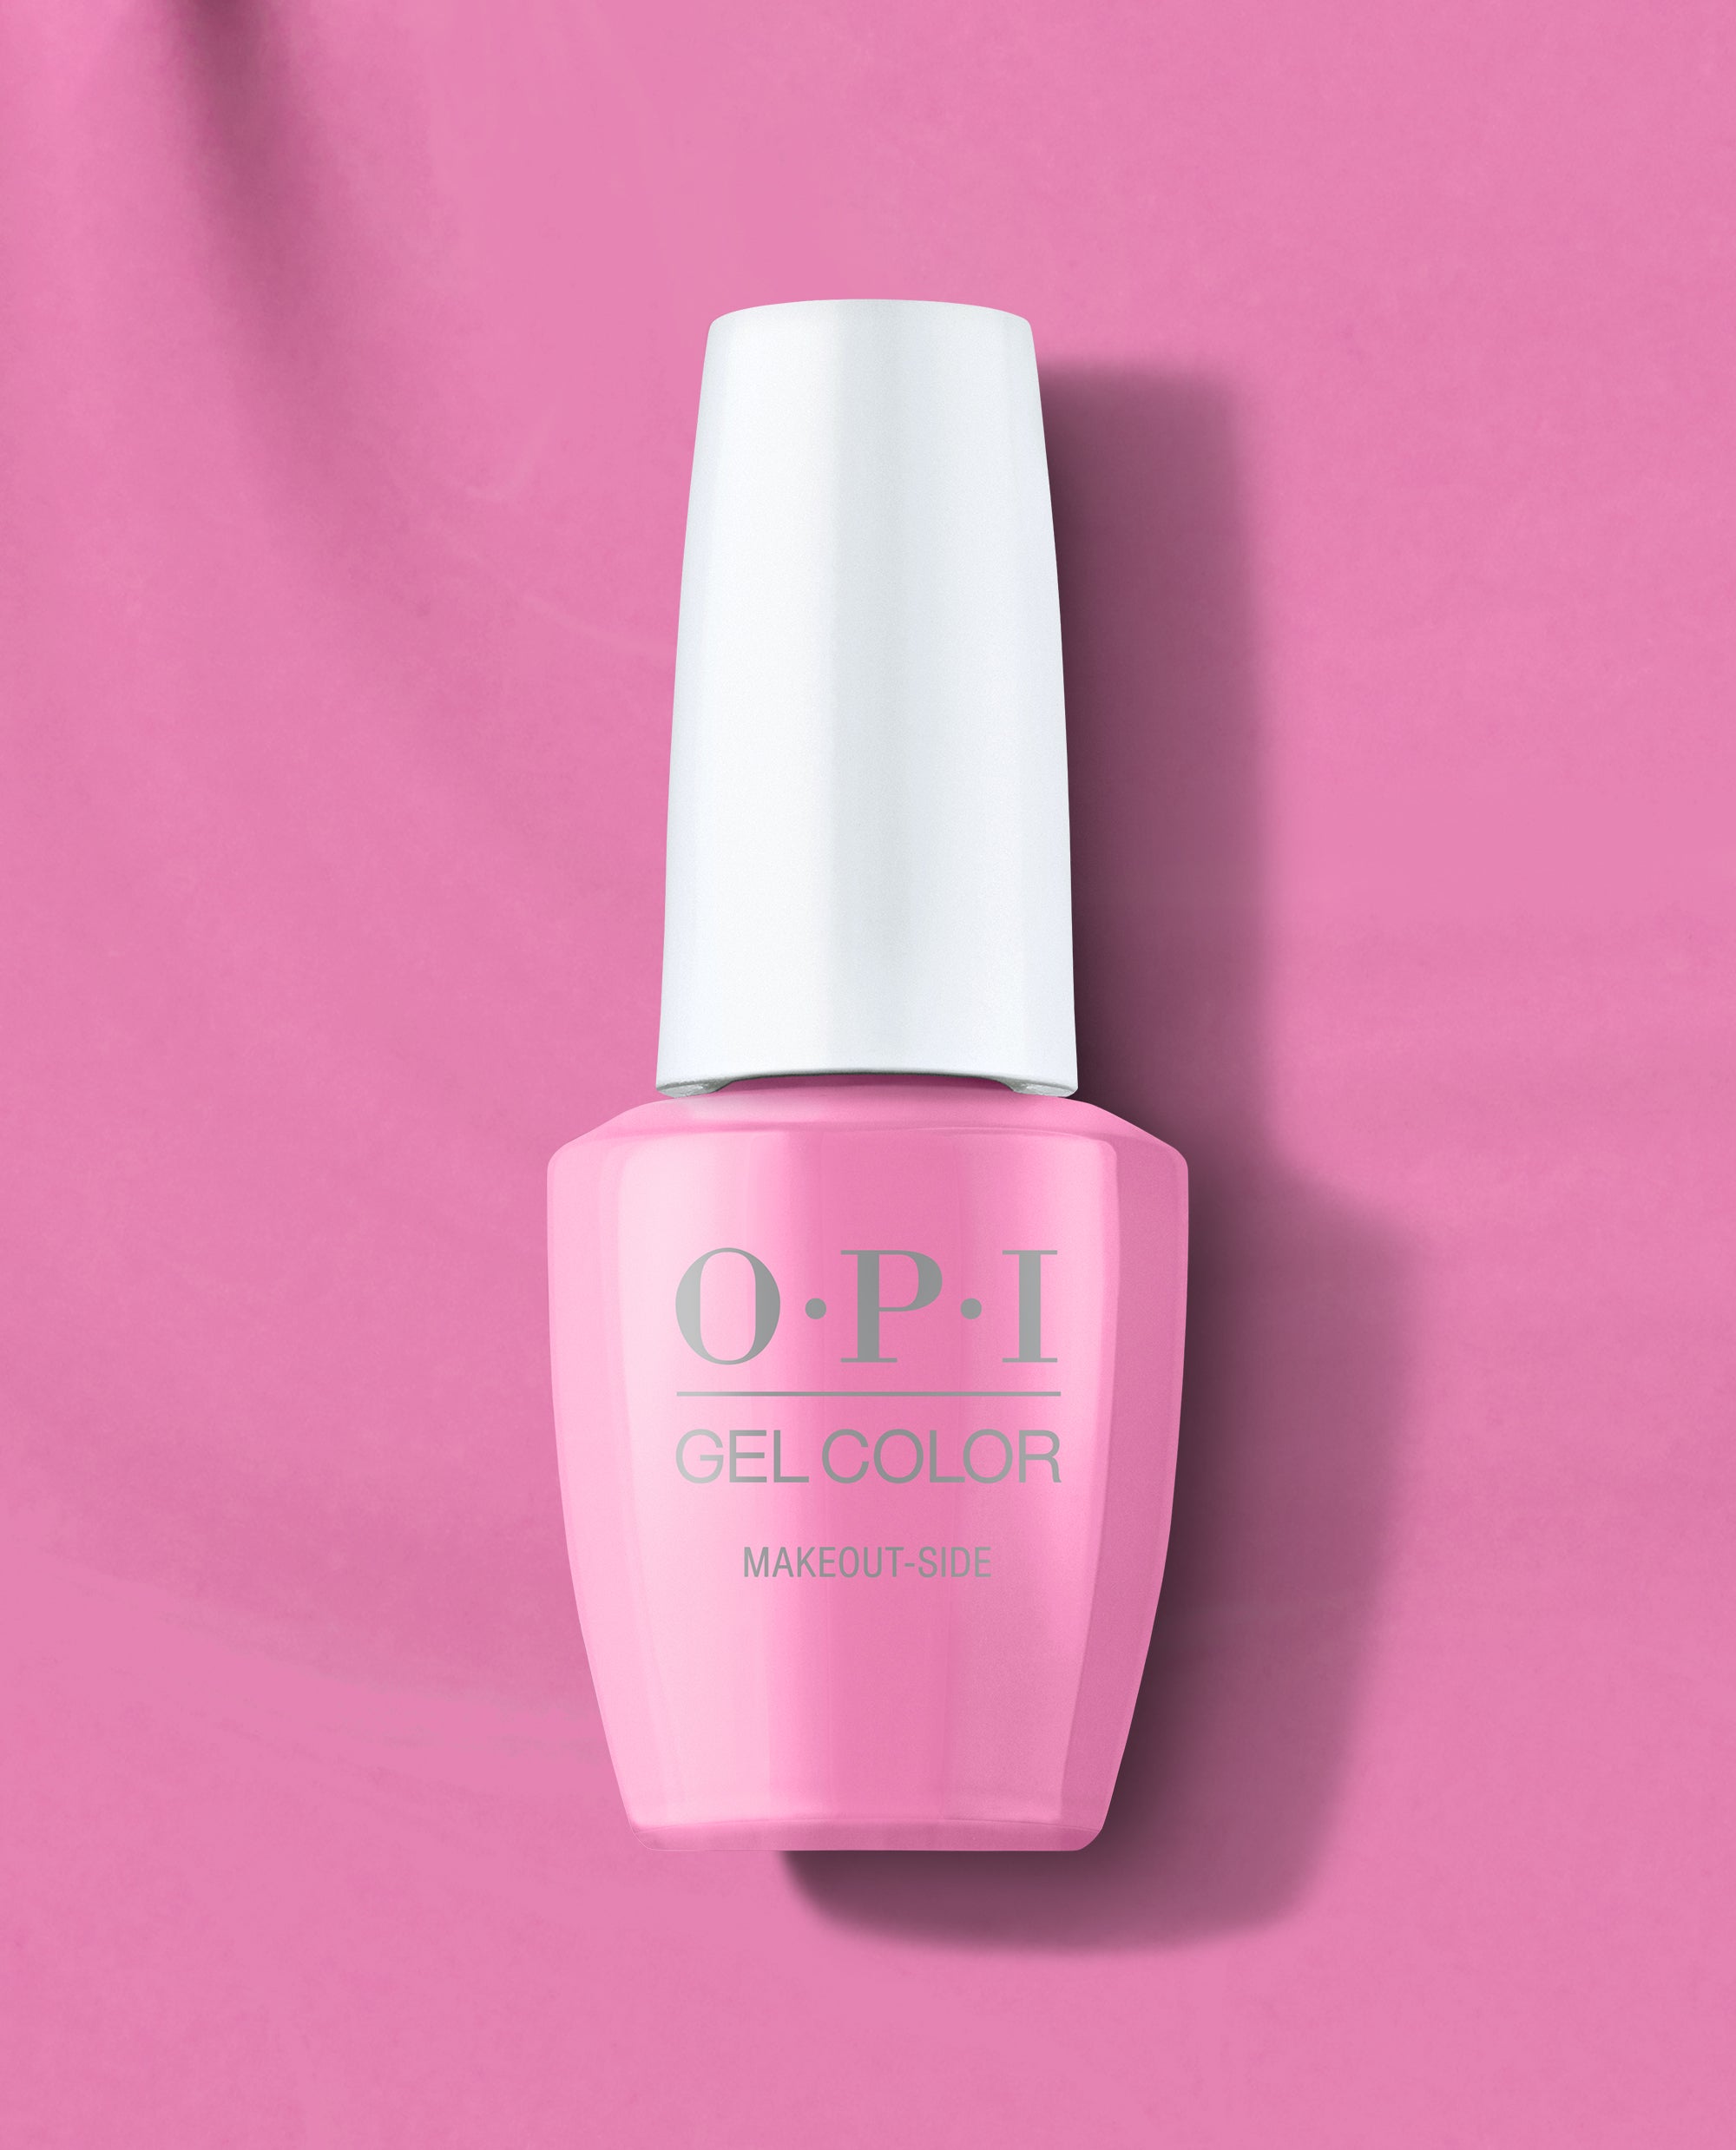 OPI®: Makeout-side - Bright Pink Gel Nail Polish